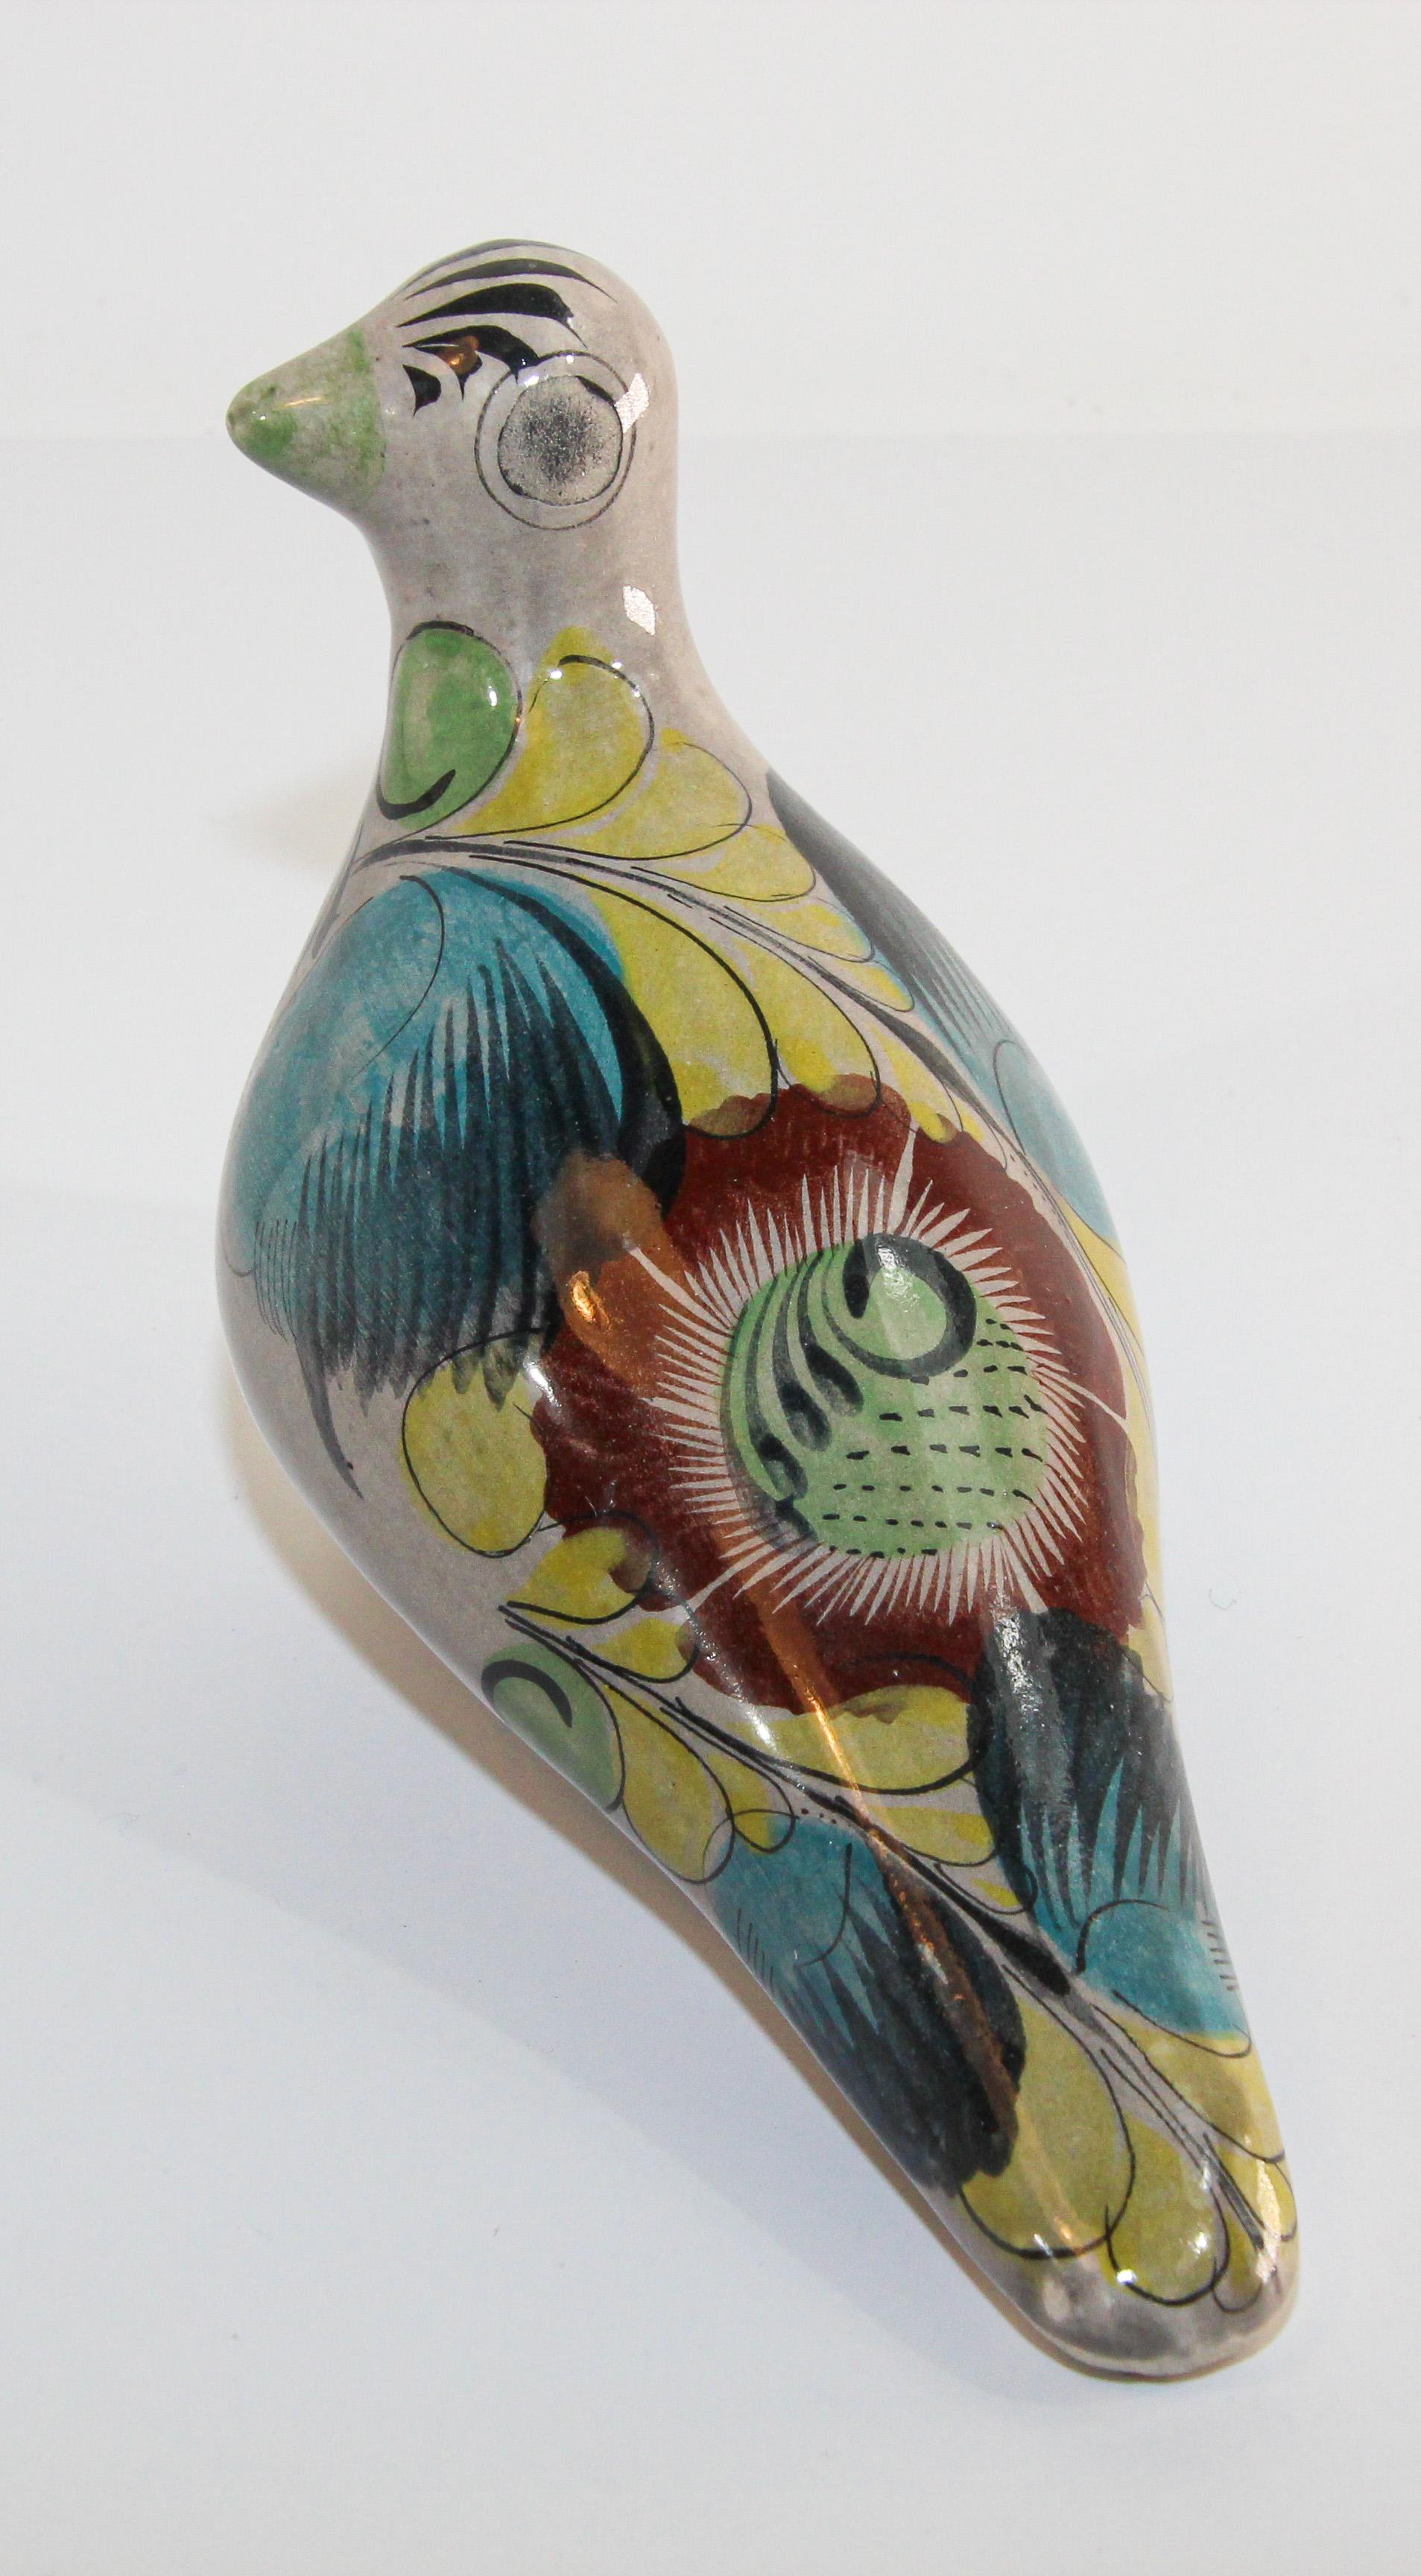 Vintage Mexican Tonala handbemalte Keramik Vogel Folk Art.
Flora de la Cruz Acapulco Gro Mexiko handbemalt Vogel Taube Keramik.
Warme Erdtöne in polychromen Farben mit abstraktem Design, das von Hand auf den Körper gemalt wurde.
Mexiko